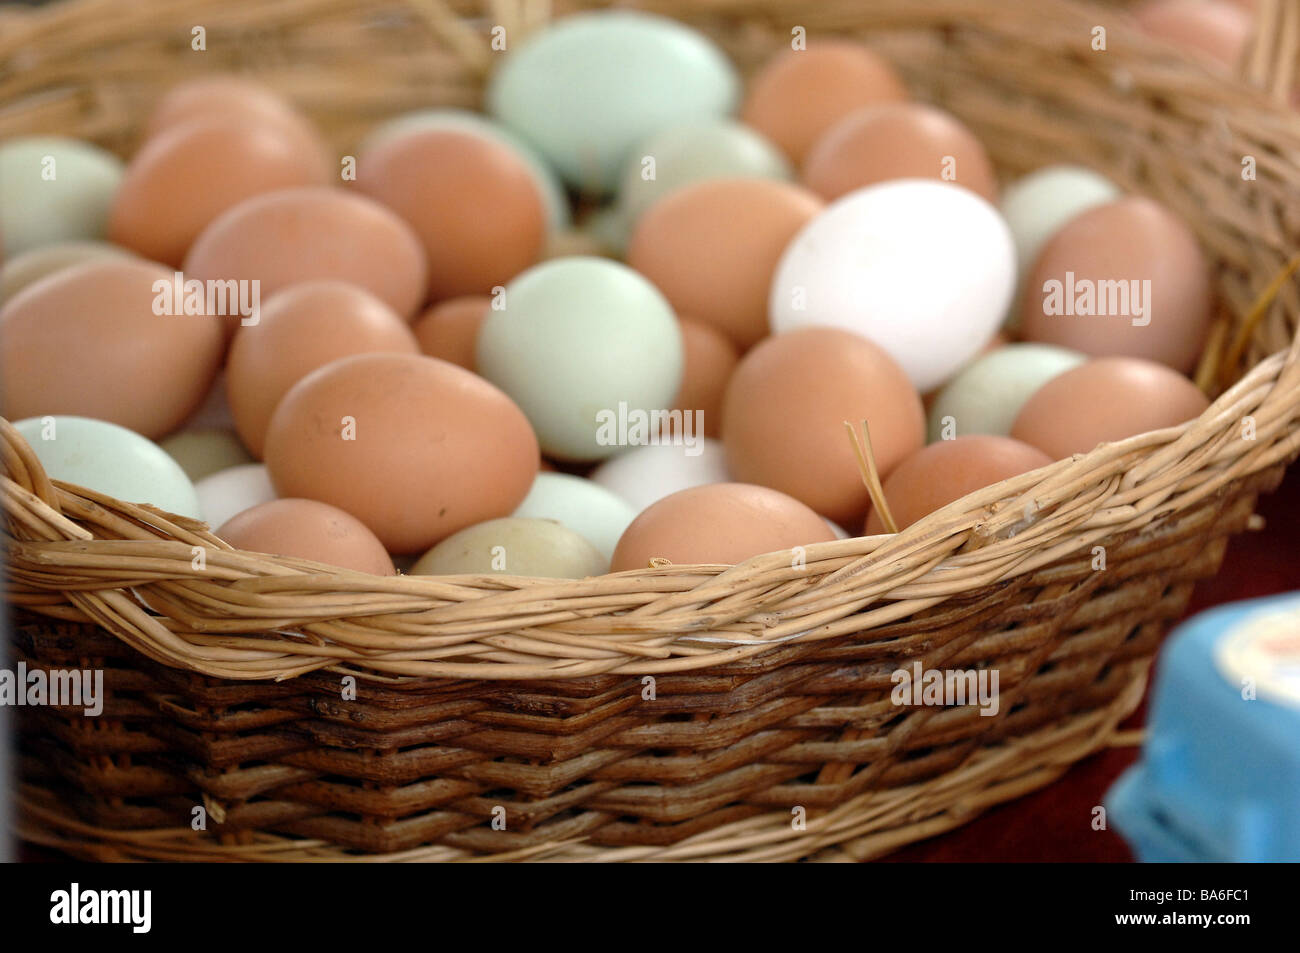 A basket of free range eggs on display Stock Photo